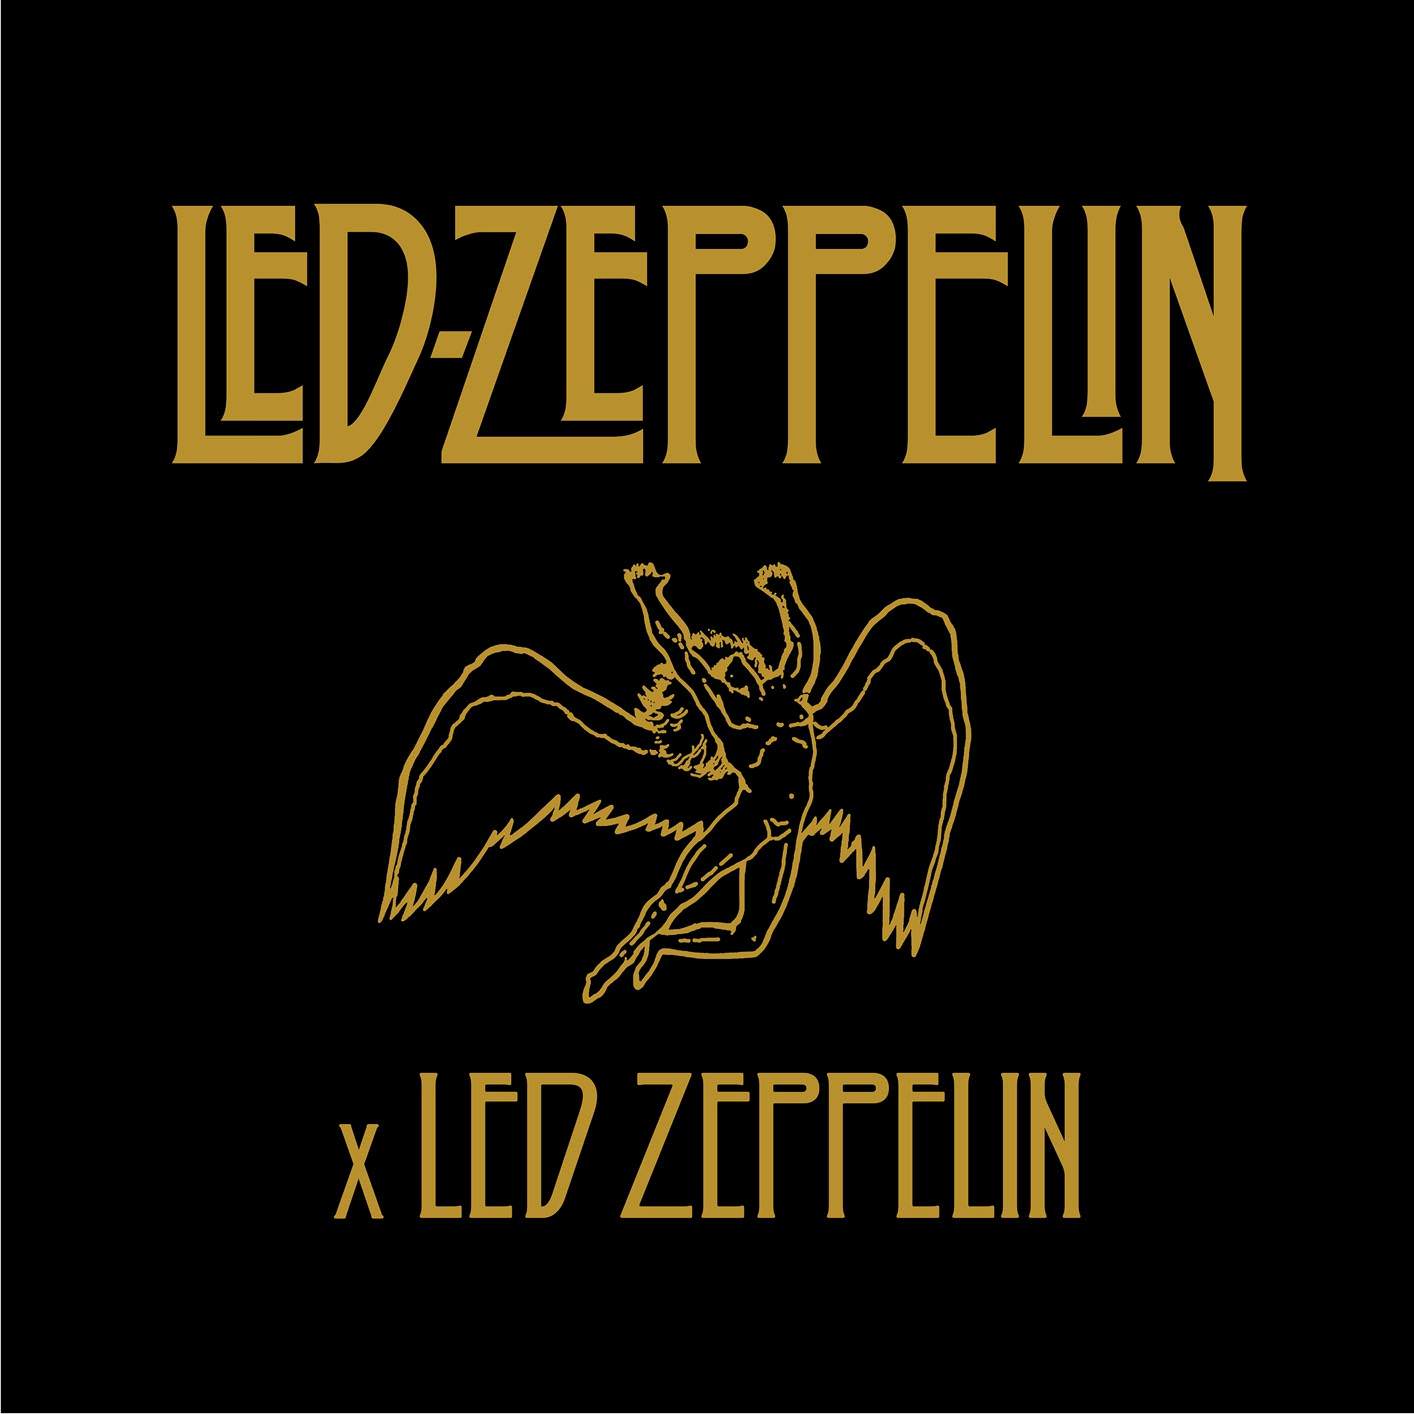 Led Zeppelin - Led Zeppelin x Led Zeppelin (Remastered) (2018) [FLAC 24bit/96kHz]